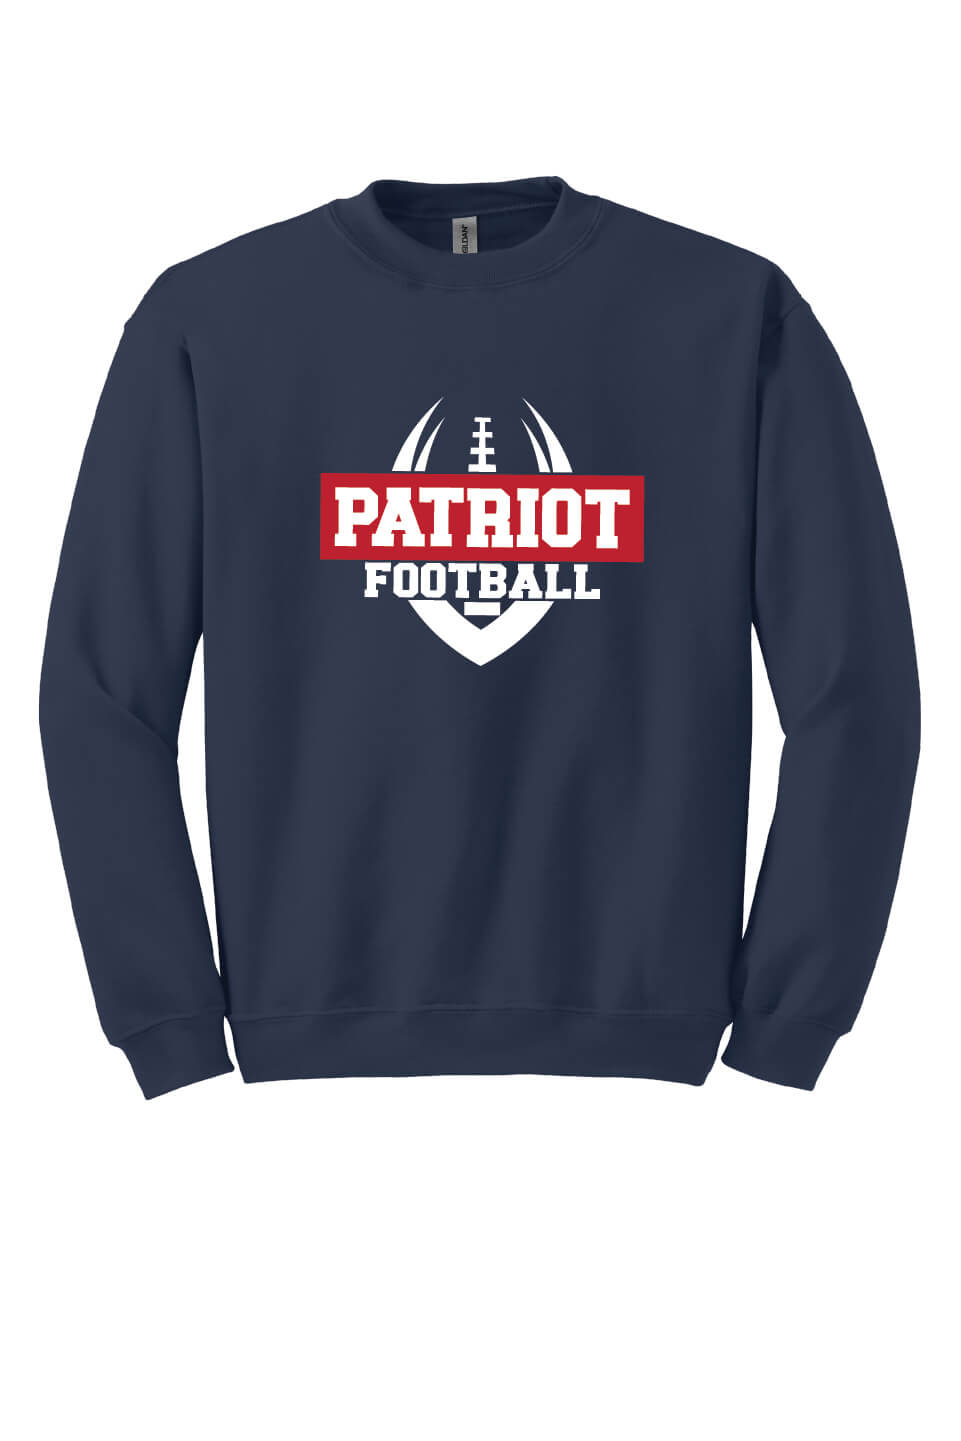 Patriot Football Crewneck Sweatshirt (Youth) navy